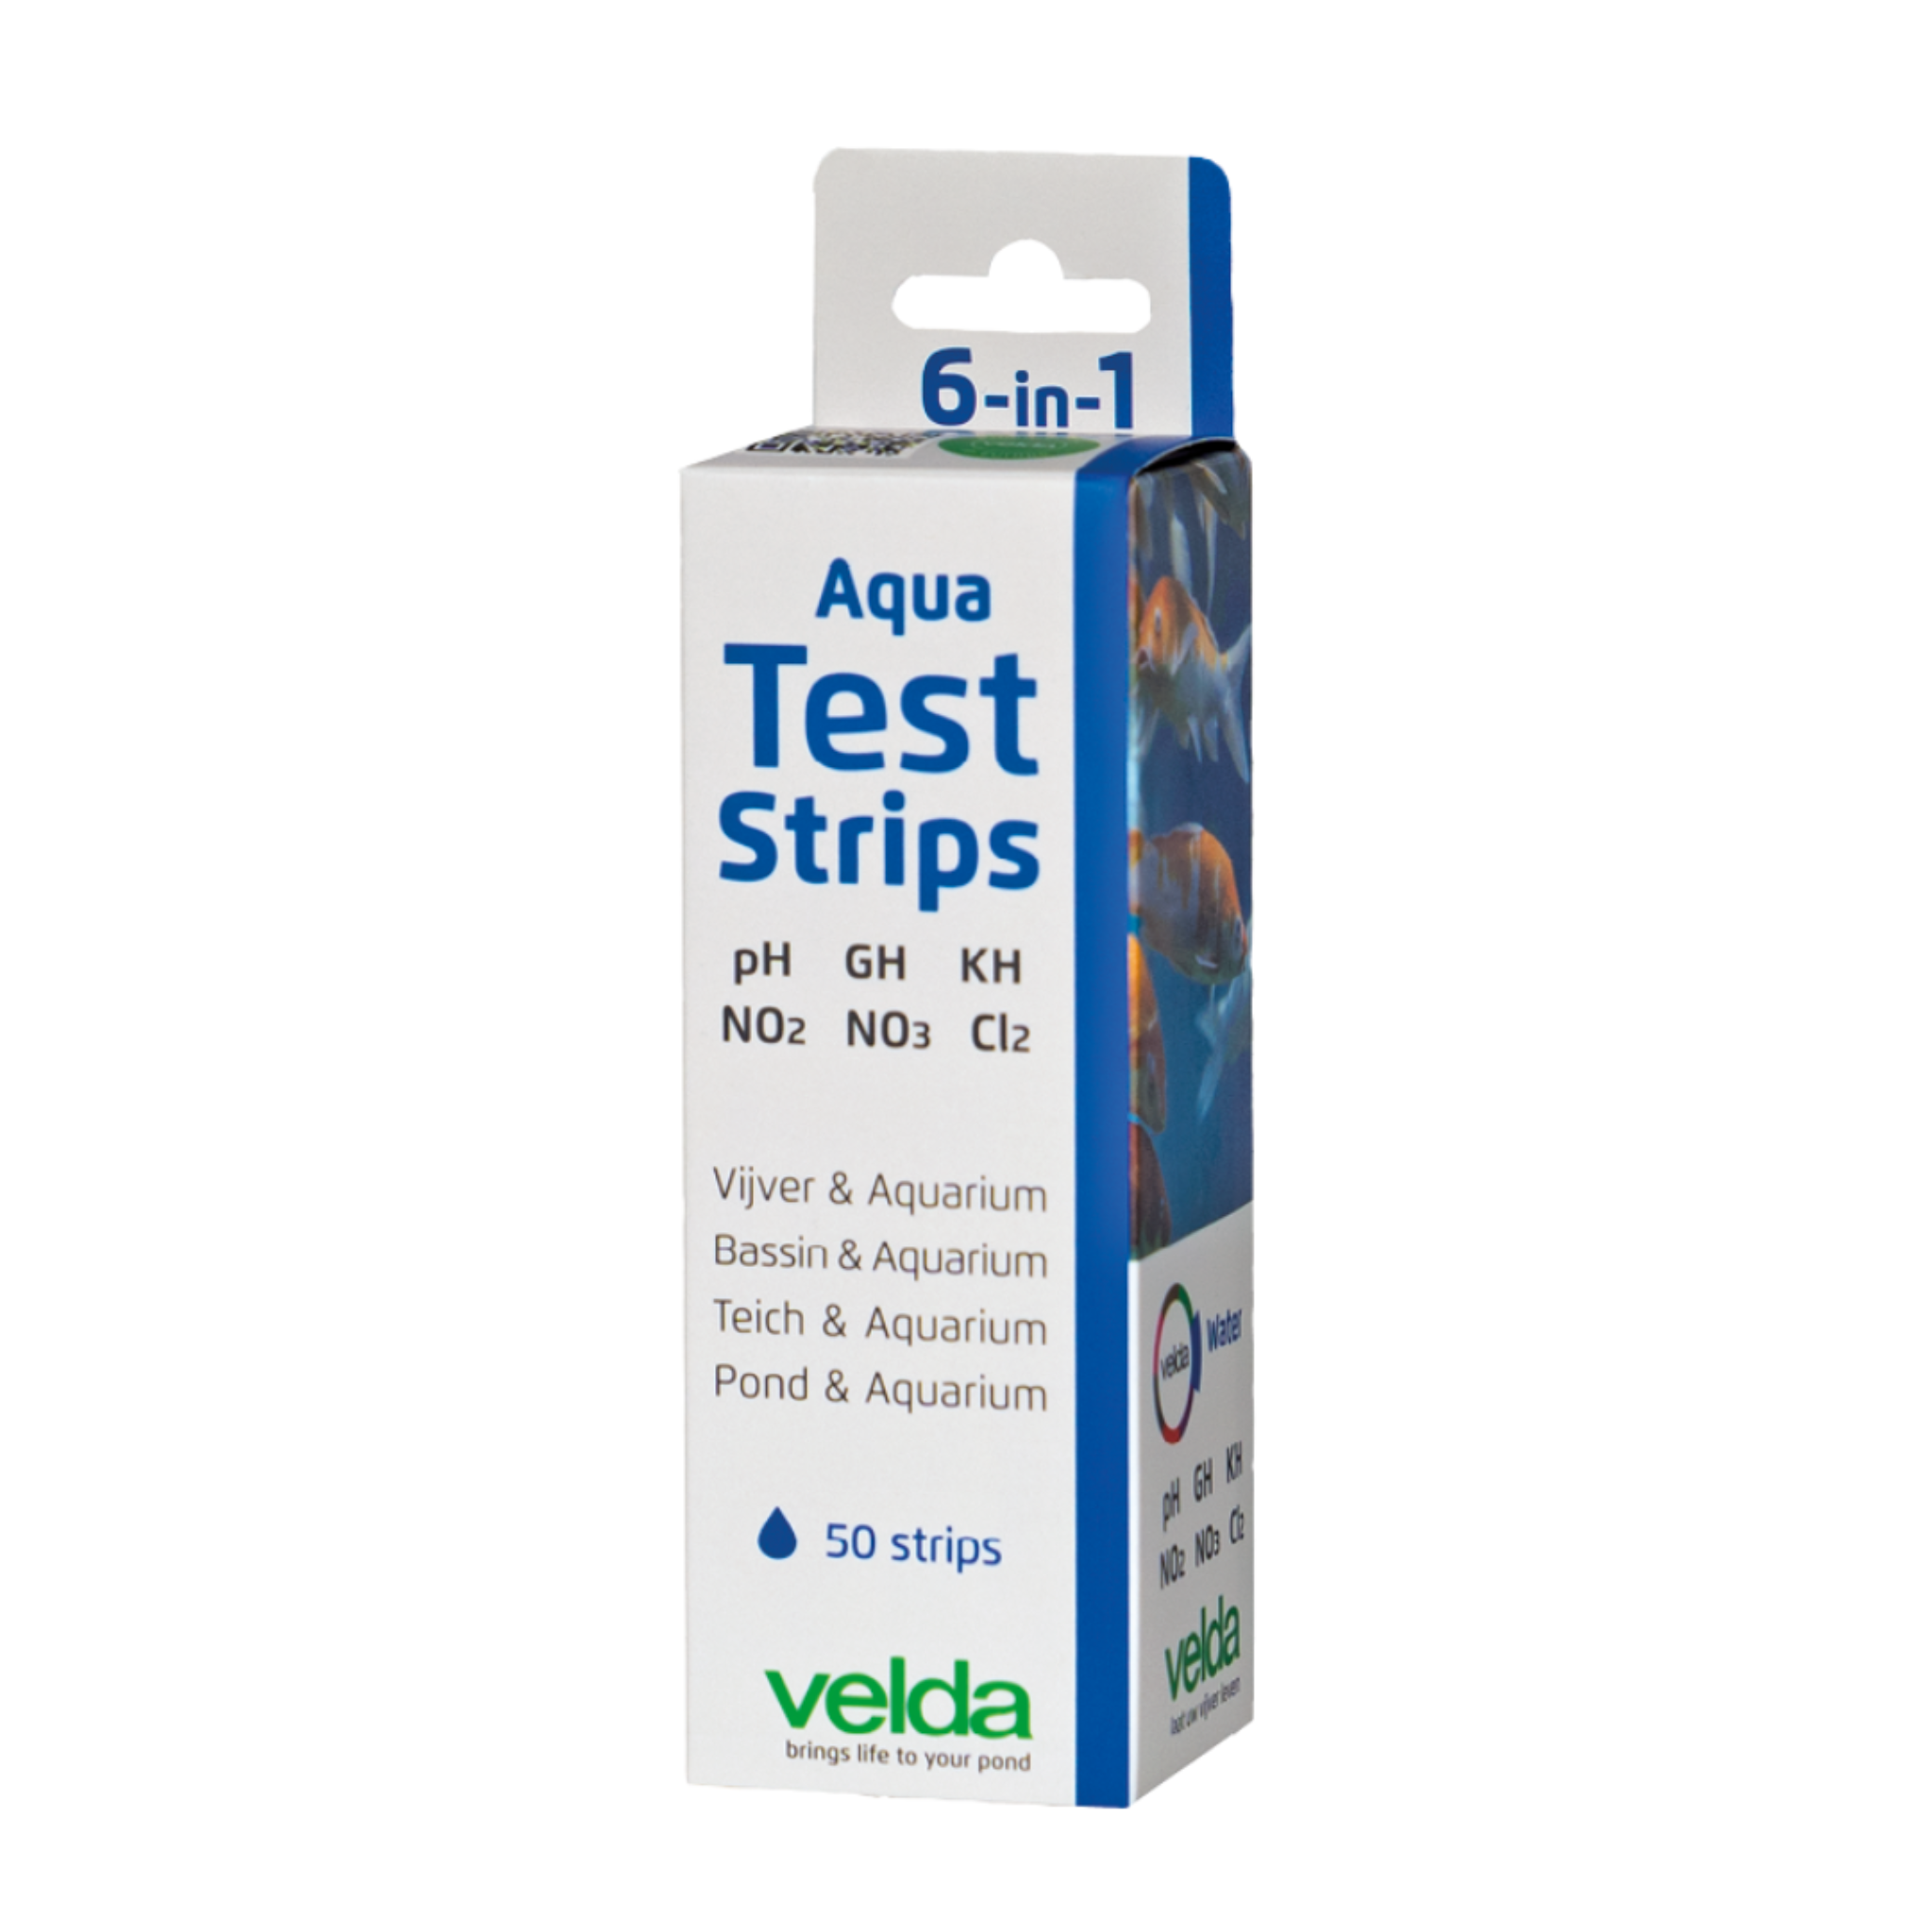 Aqua Test Strips Velda